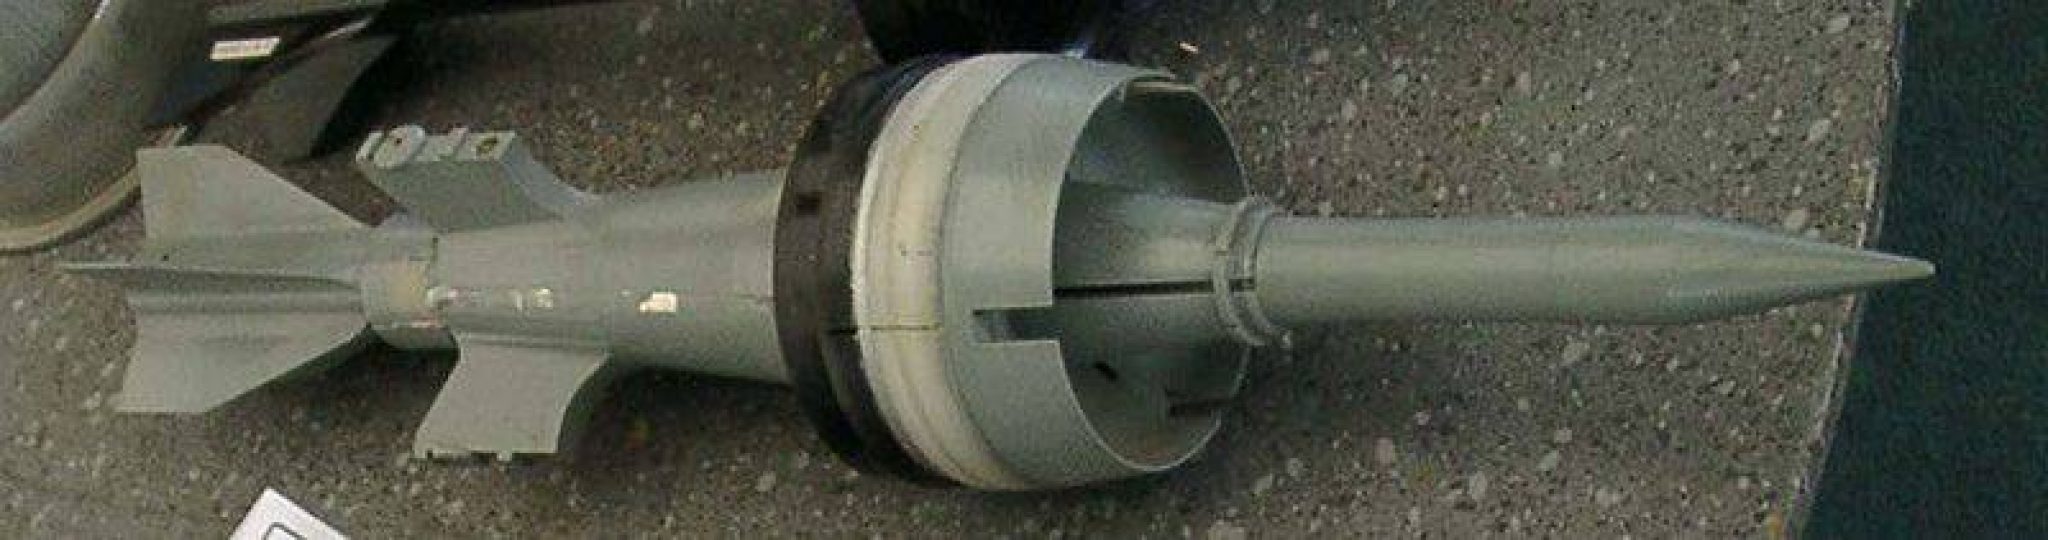 Свинец 2 уран. 125 Мм подкалиберный снаряд 3бм60. Подкалиберный снаряд БМ-2. ОБПС 3бм60. ОБПС вакуум.